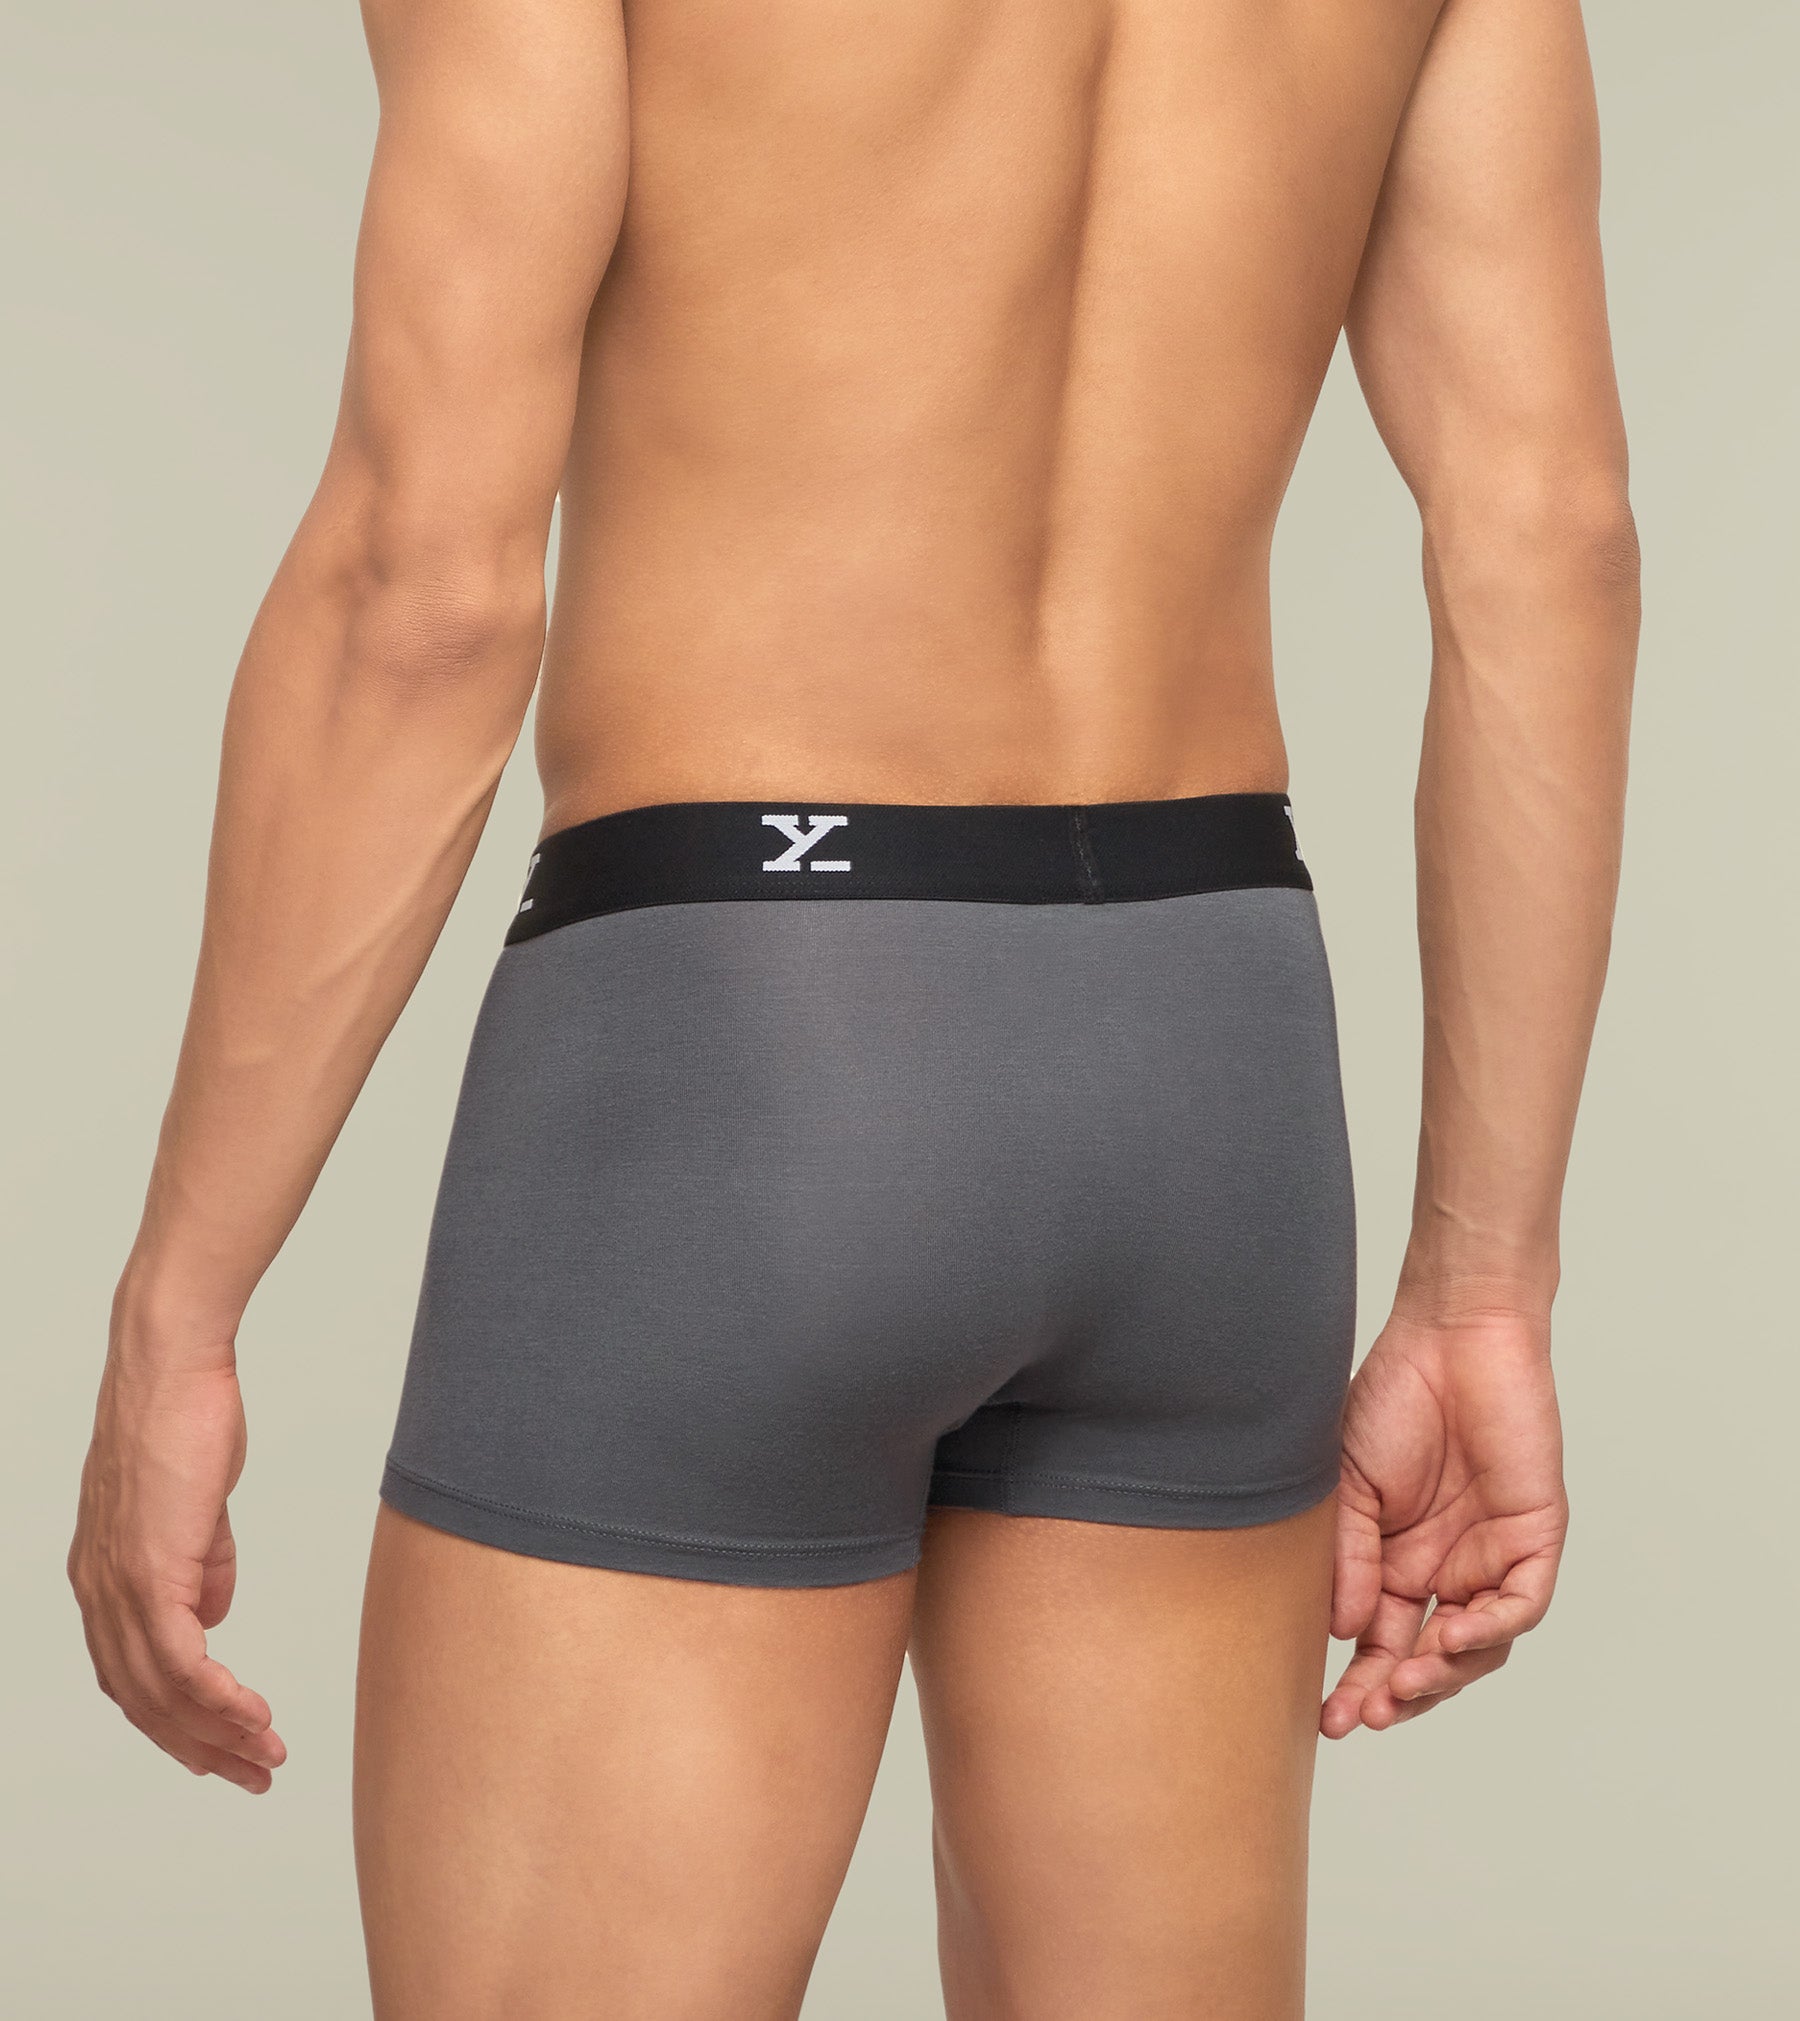 Plain XYXX Ace Medley TENCEL Modal Trunk Premium Underwear For Men